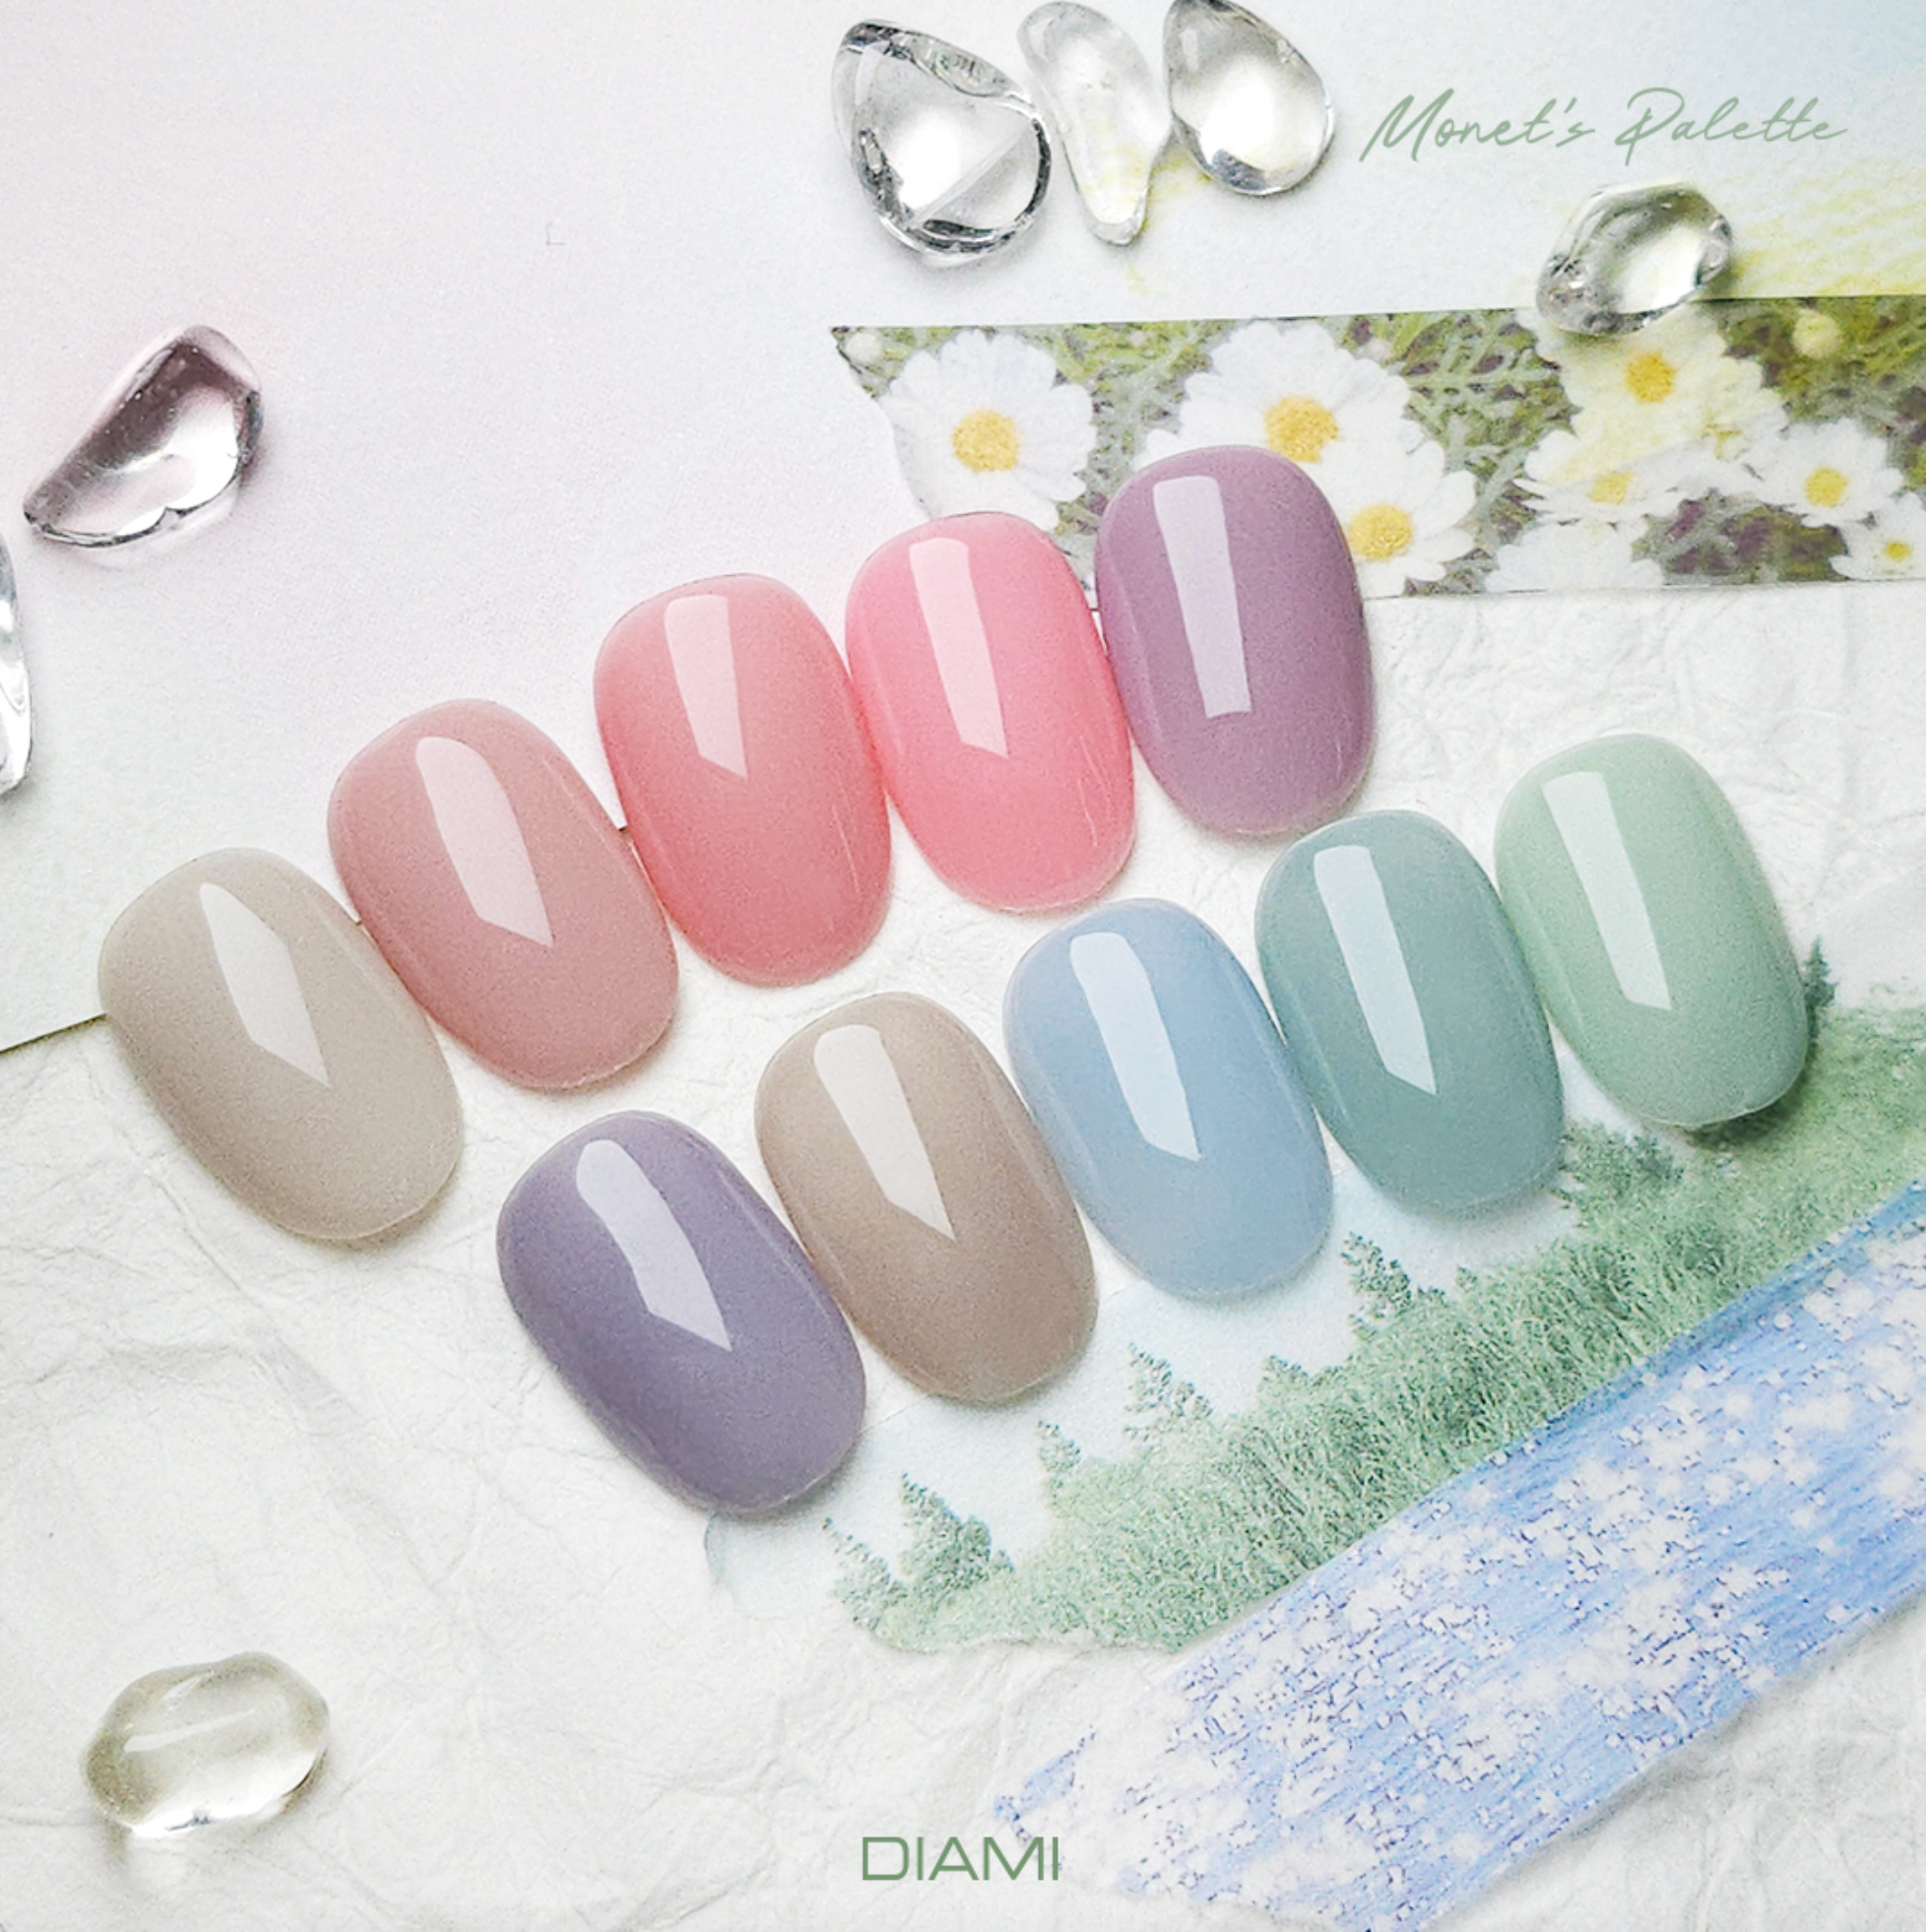 DIAMI Fresh 3.0 Monet's palette 10pc collection - HEMA FREE